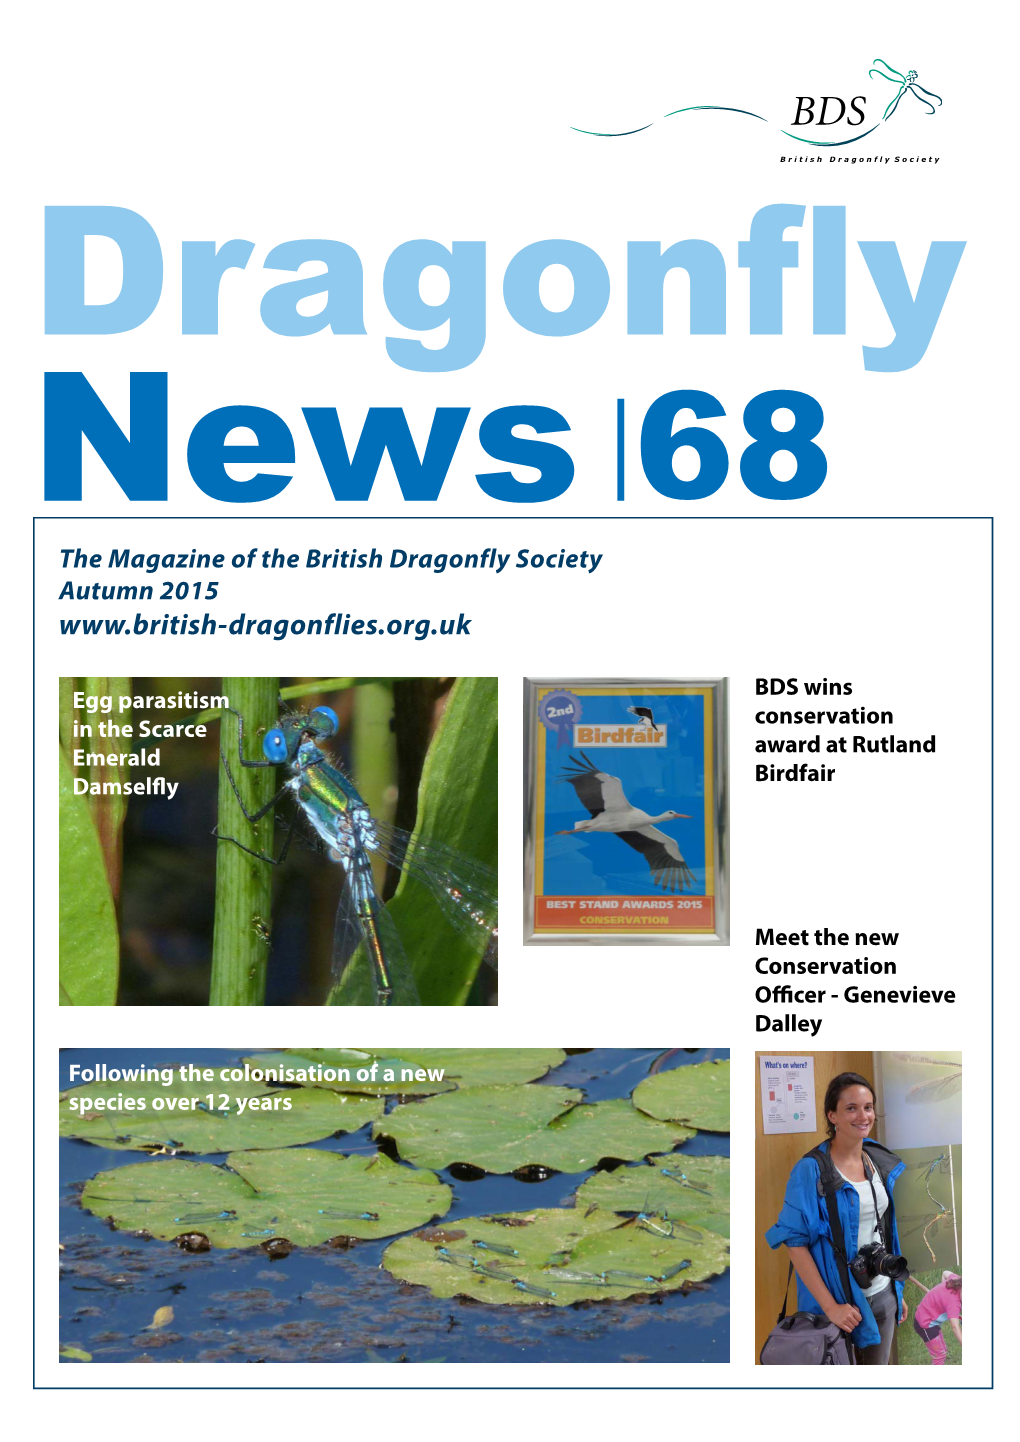 Dragonfly News 68 the Magazine of the British Dragonfly Society Autumn 2015